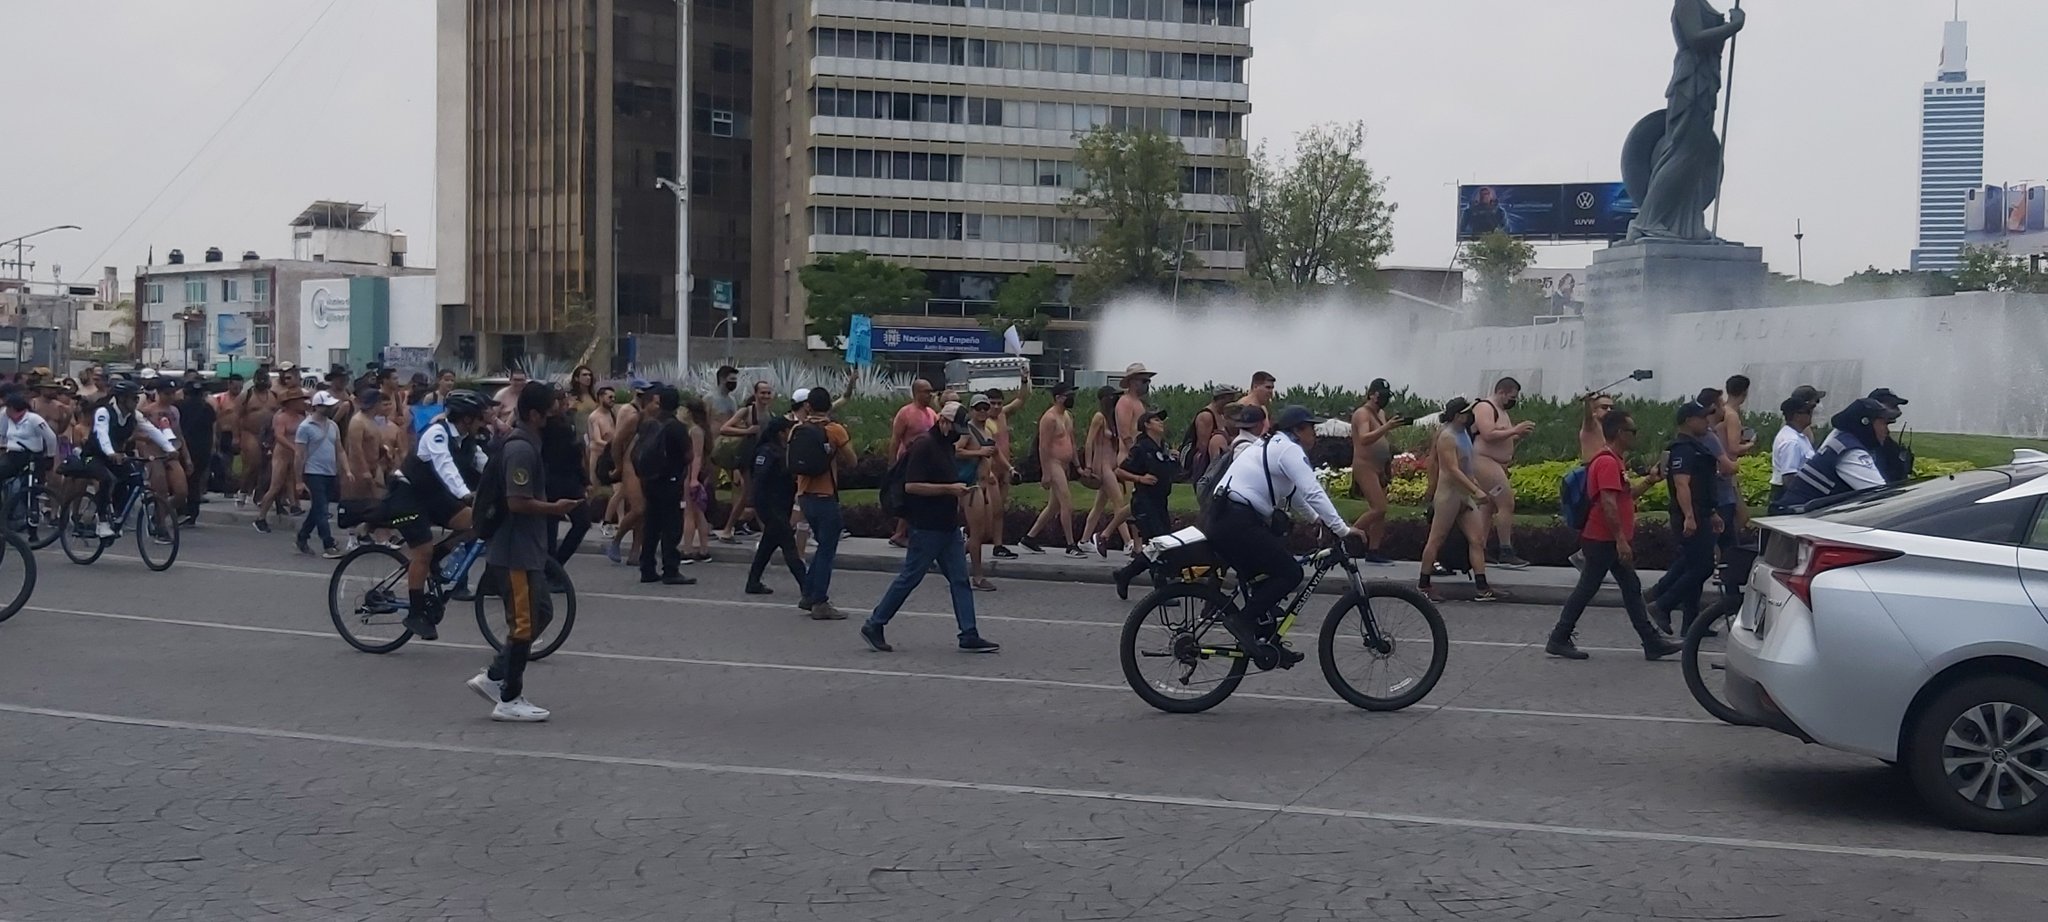 Marcha nudista (Foto Twitter @DiaAlDesnudo)